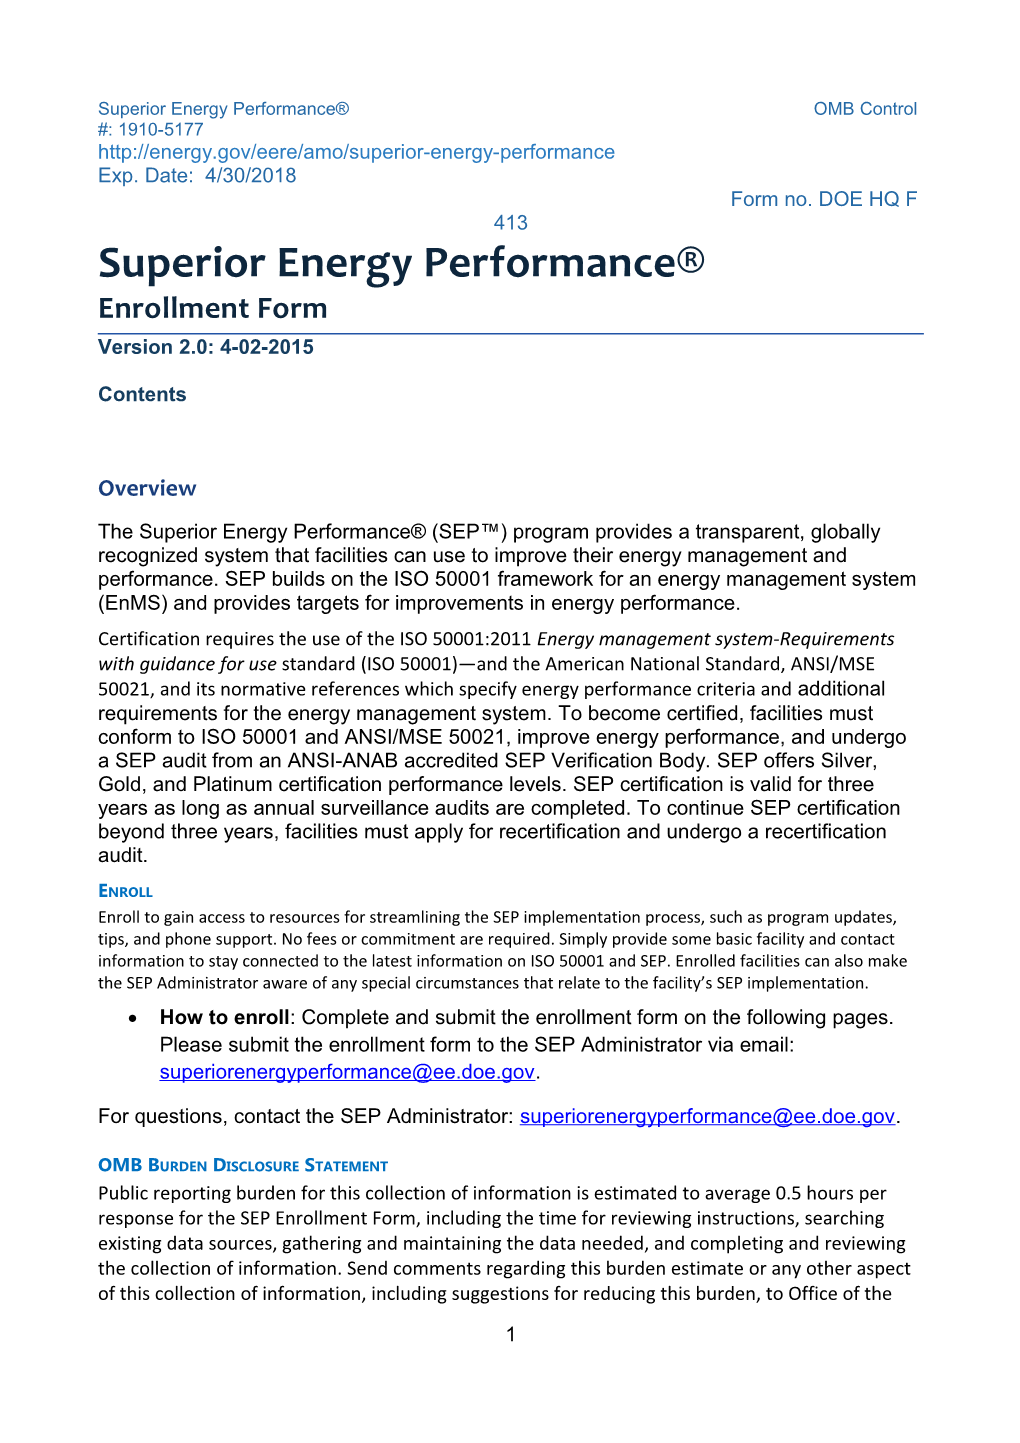 Superior Energy Performance OMB Control #: 1910-5177